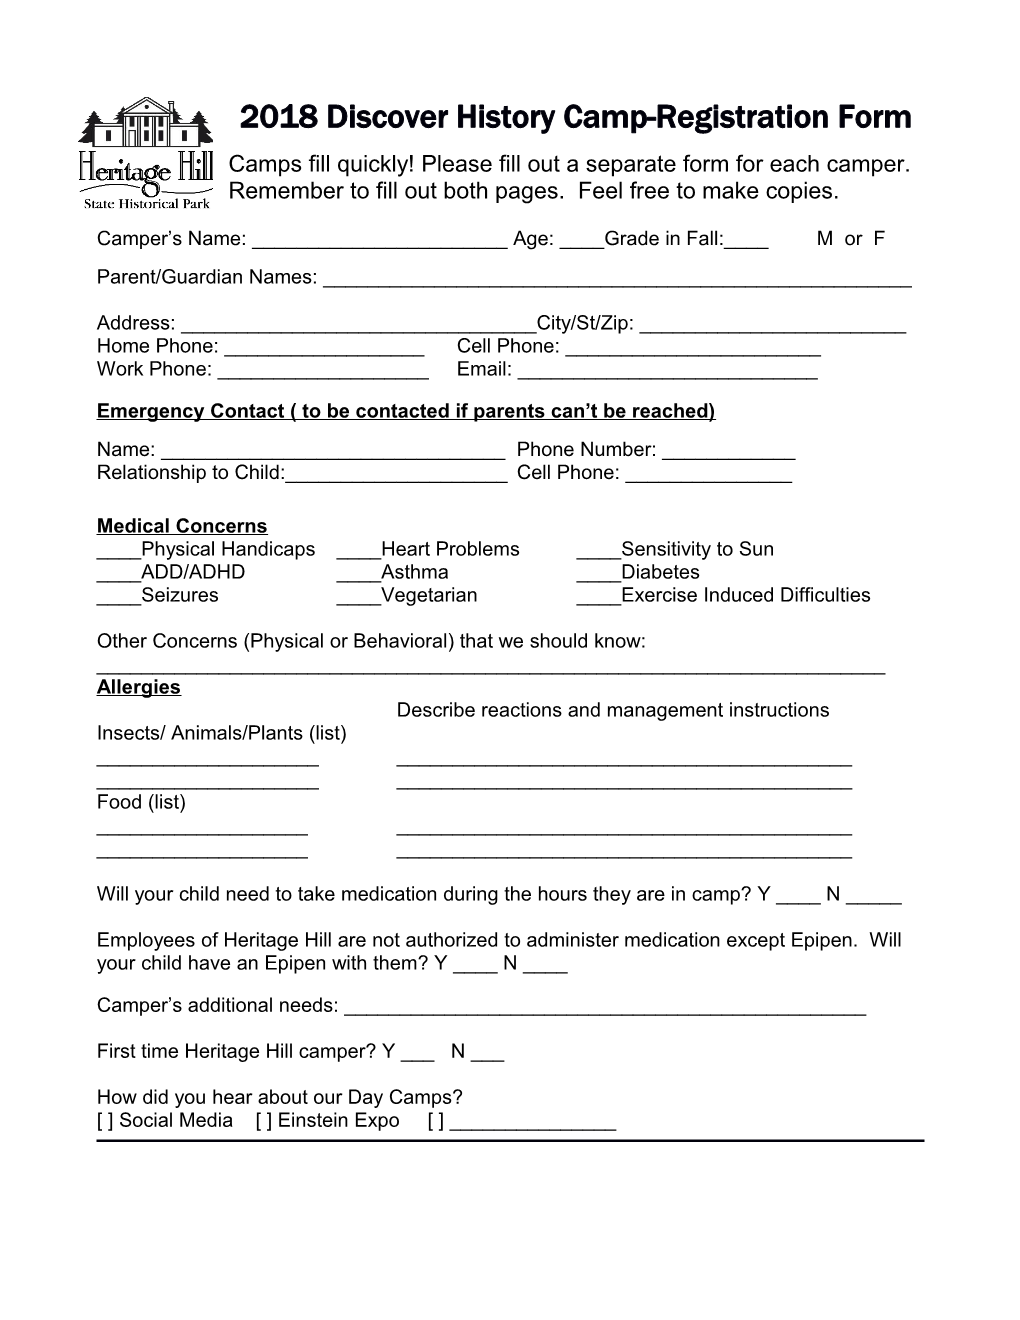 2005 Discover History Camp Registration Form